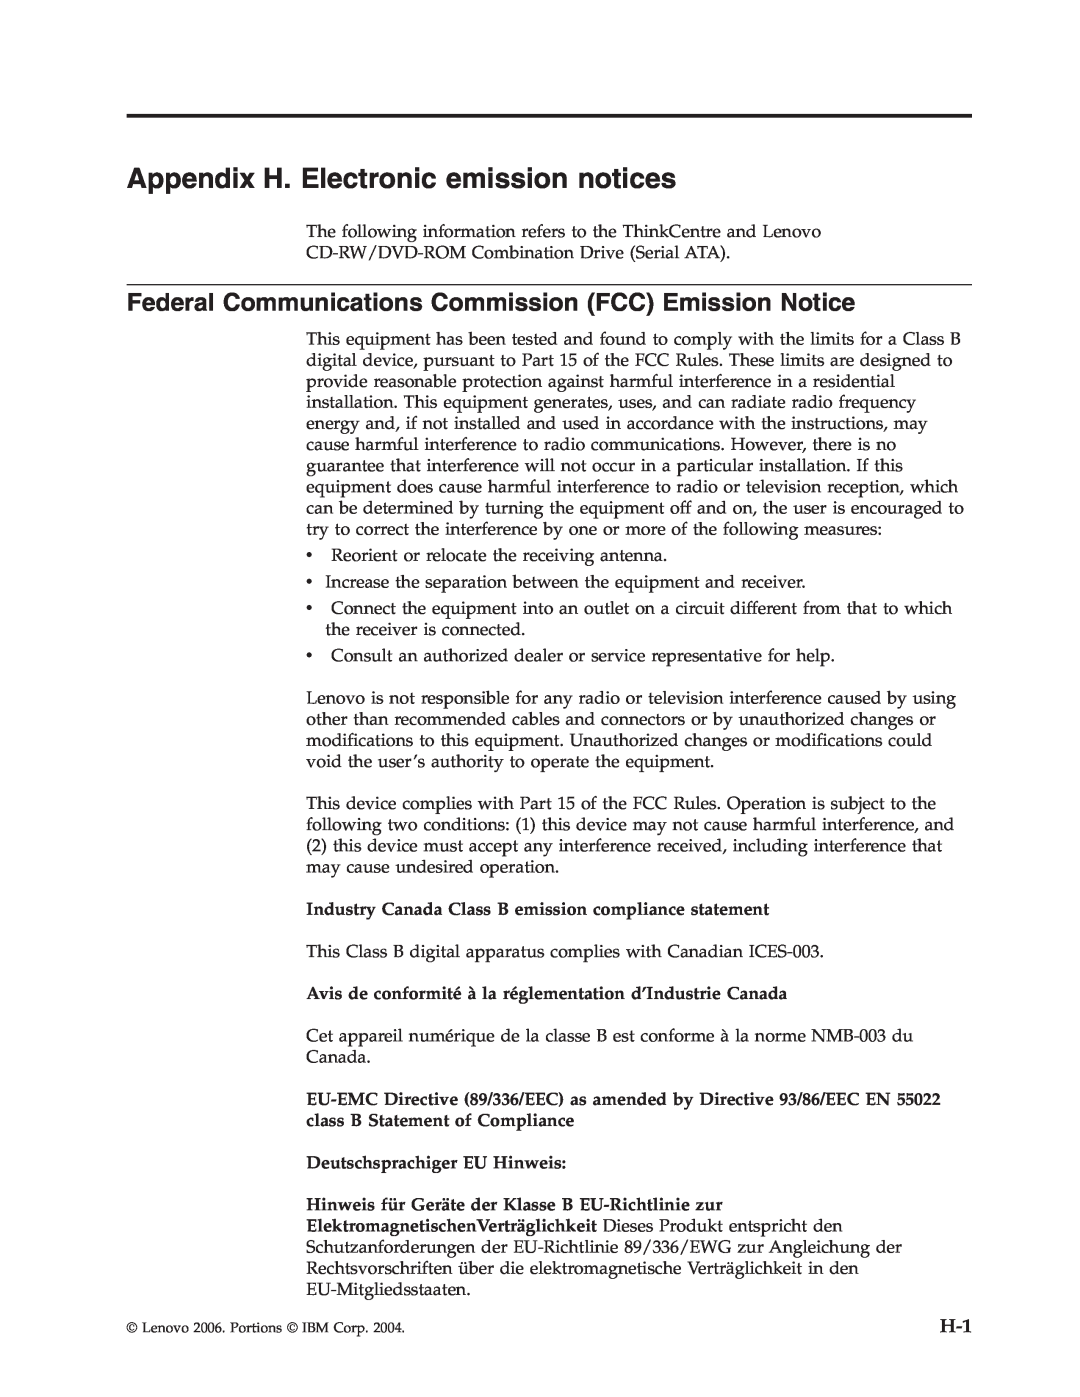 Lenovo 41N5624 manual Appendix H. Electronic emission notices, Deutschsprachiger EU Hinweis 